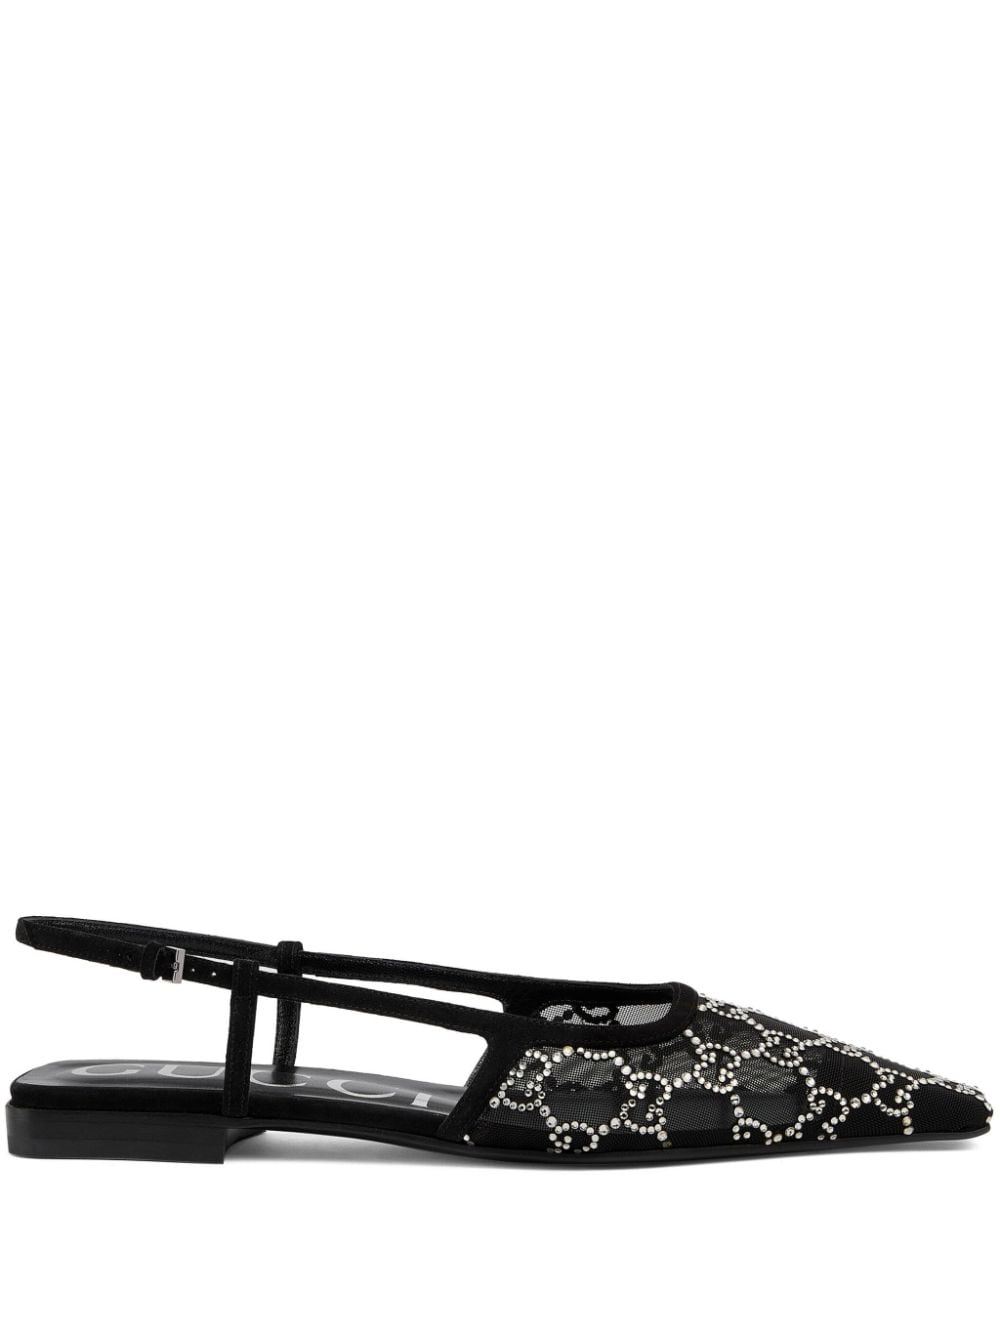 Gucci Black Leather Crystal Embellished Pointed Toe Slingback Flats